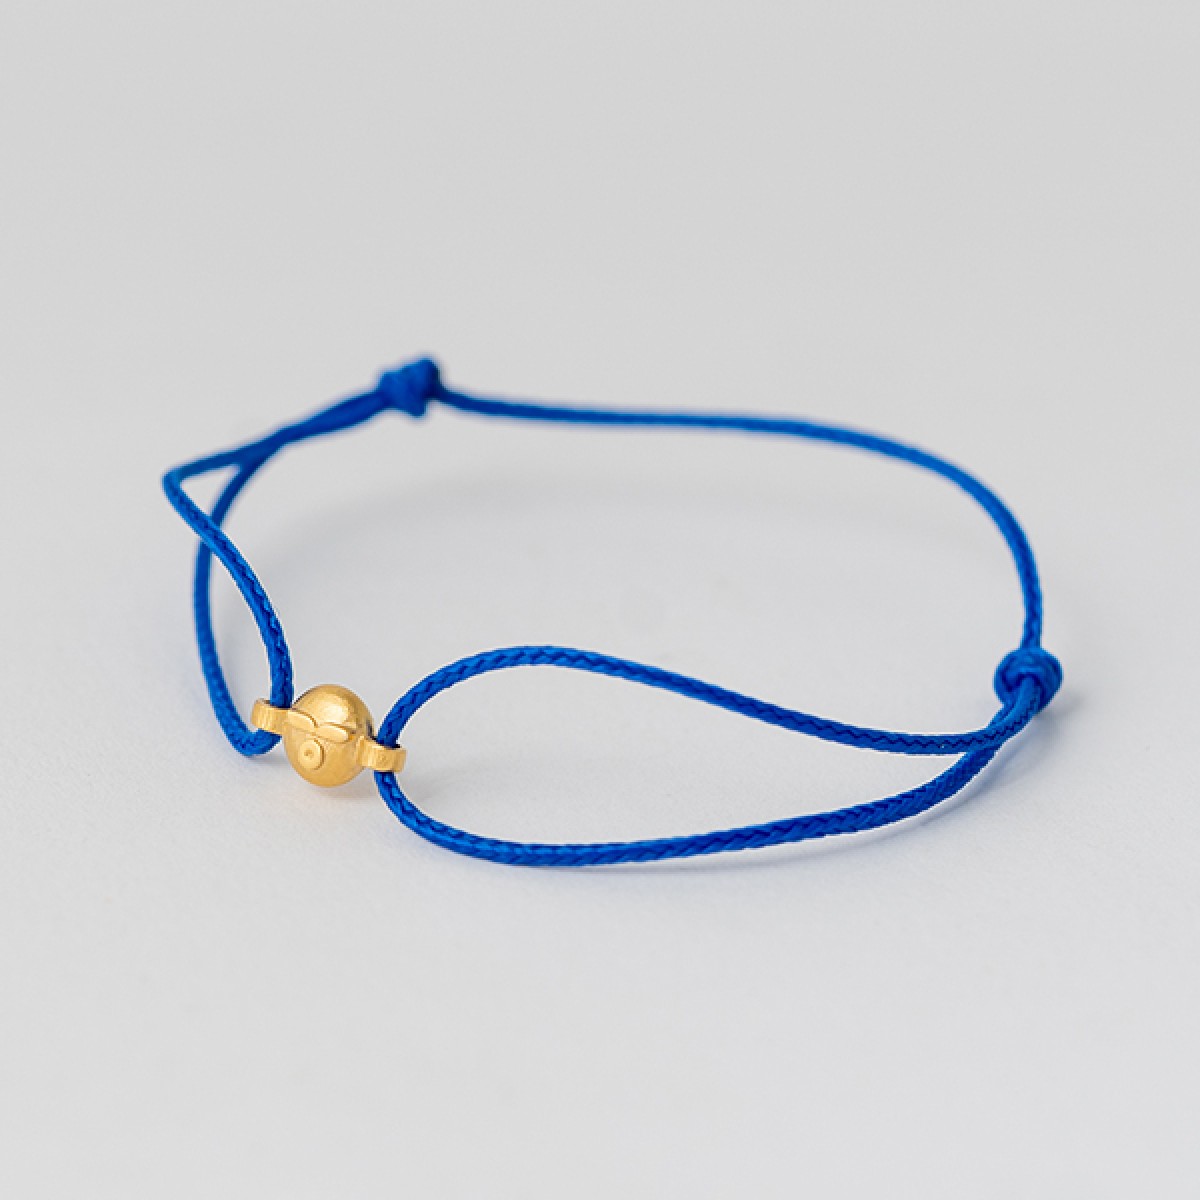 related by objects - vibe bracelet - namaste - 925 Sterlingsilber - 18k goldplattiert